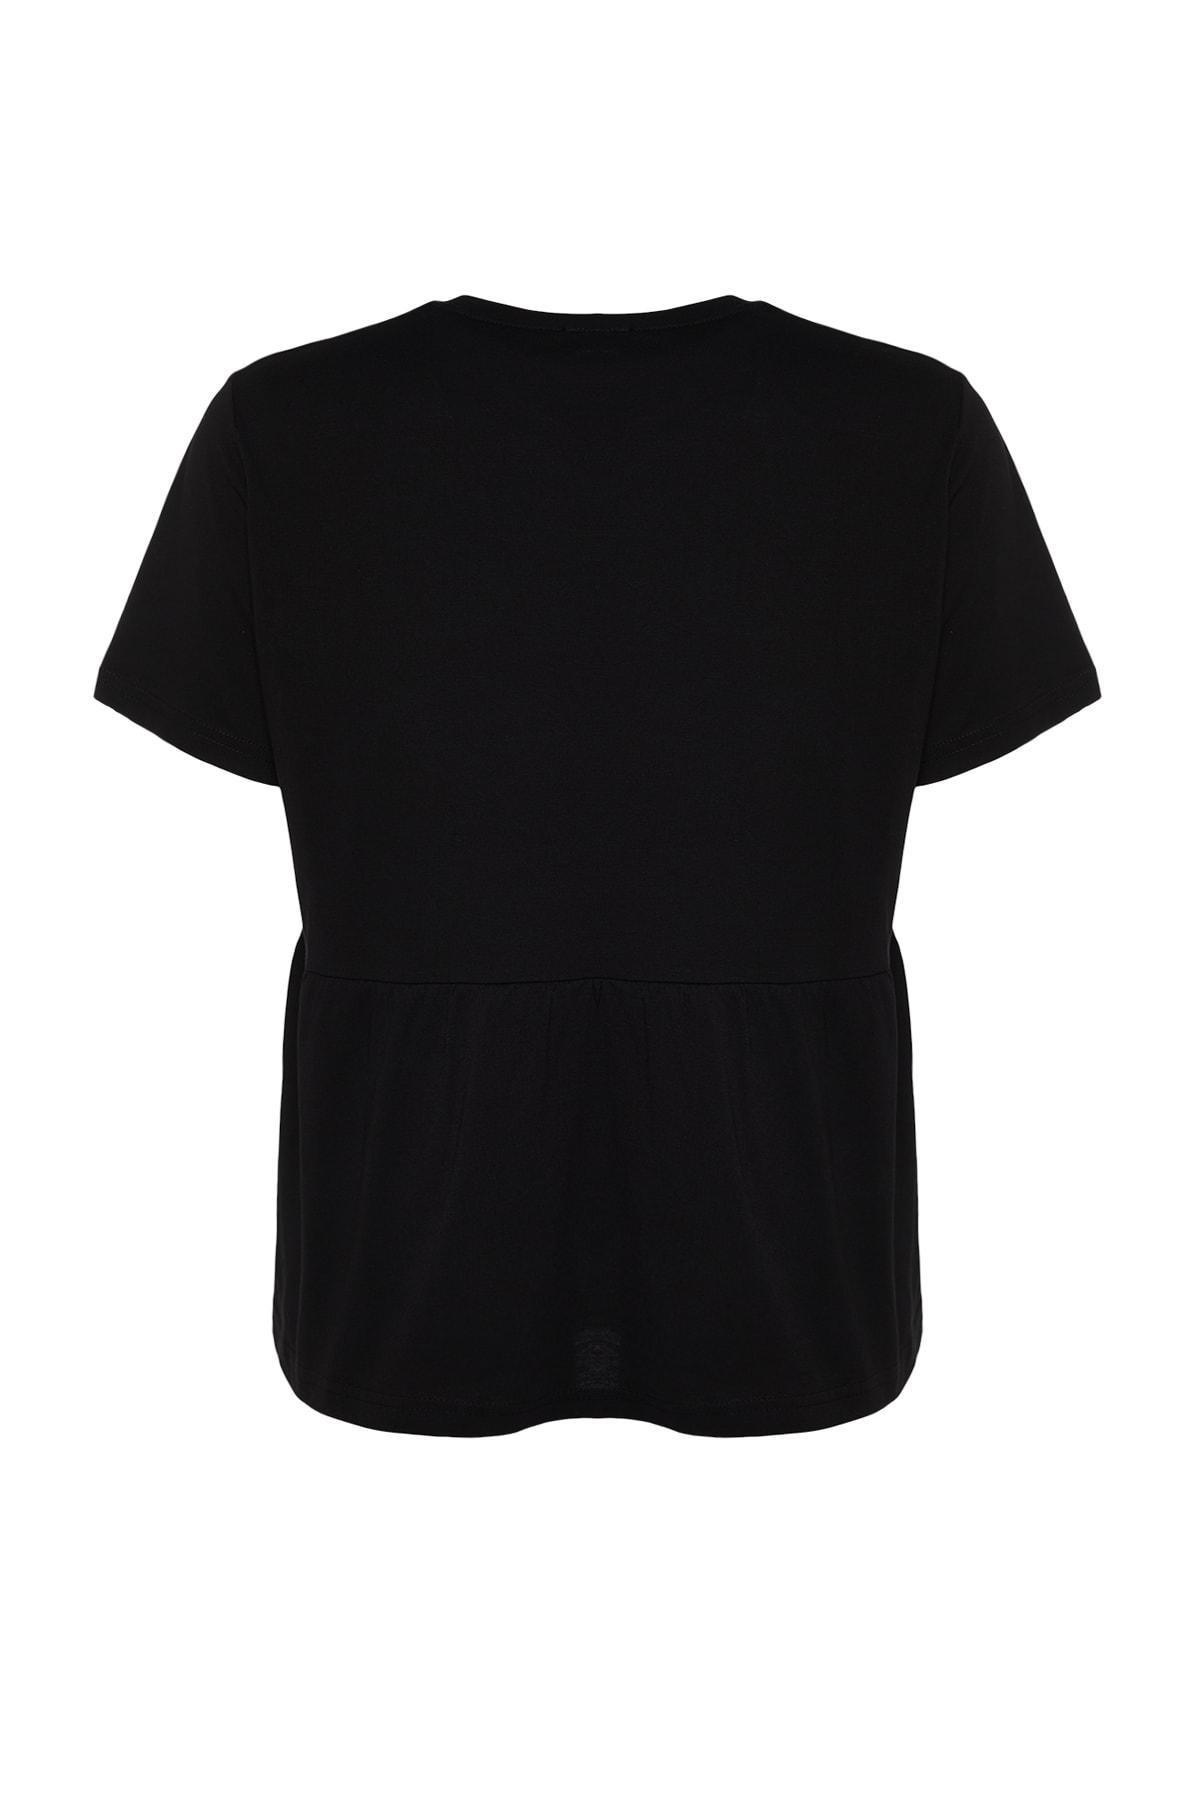 Trendyol - Black Crew Neck Plus Size T-Shirt